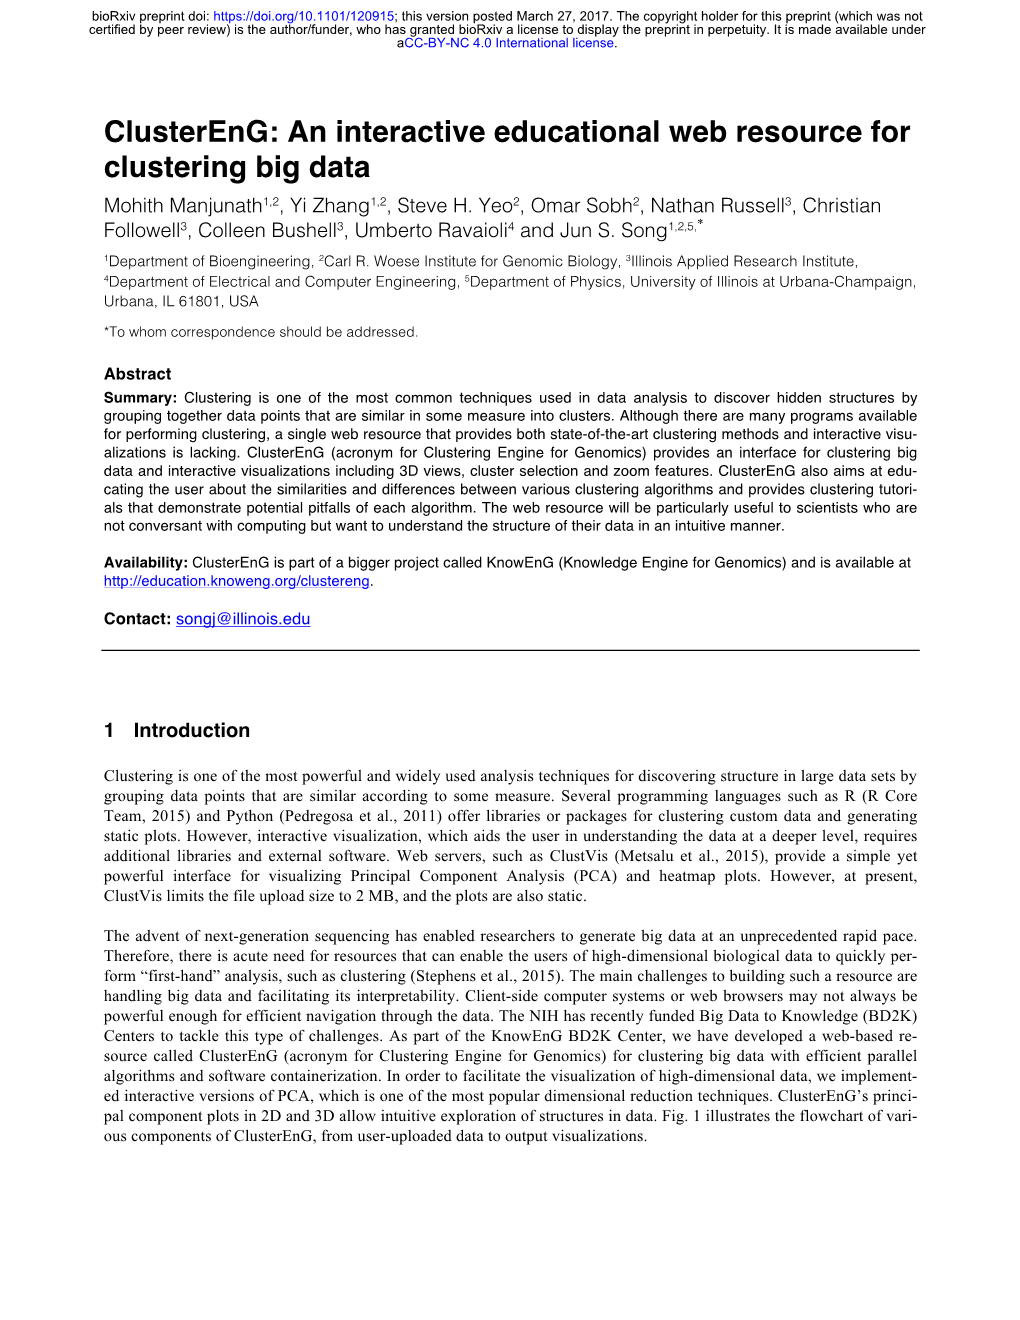 An Interactive Educational Web Resource for Clustering Big Data Mohith Manjunath1,2, Yi Zhang1,2, Steve H